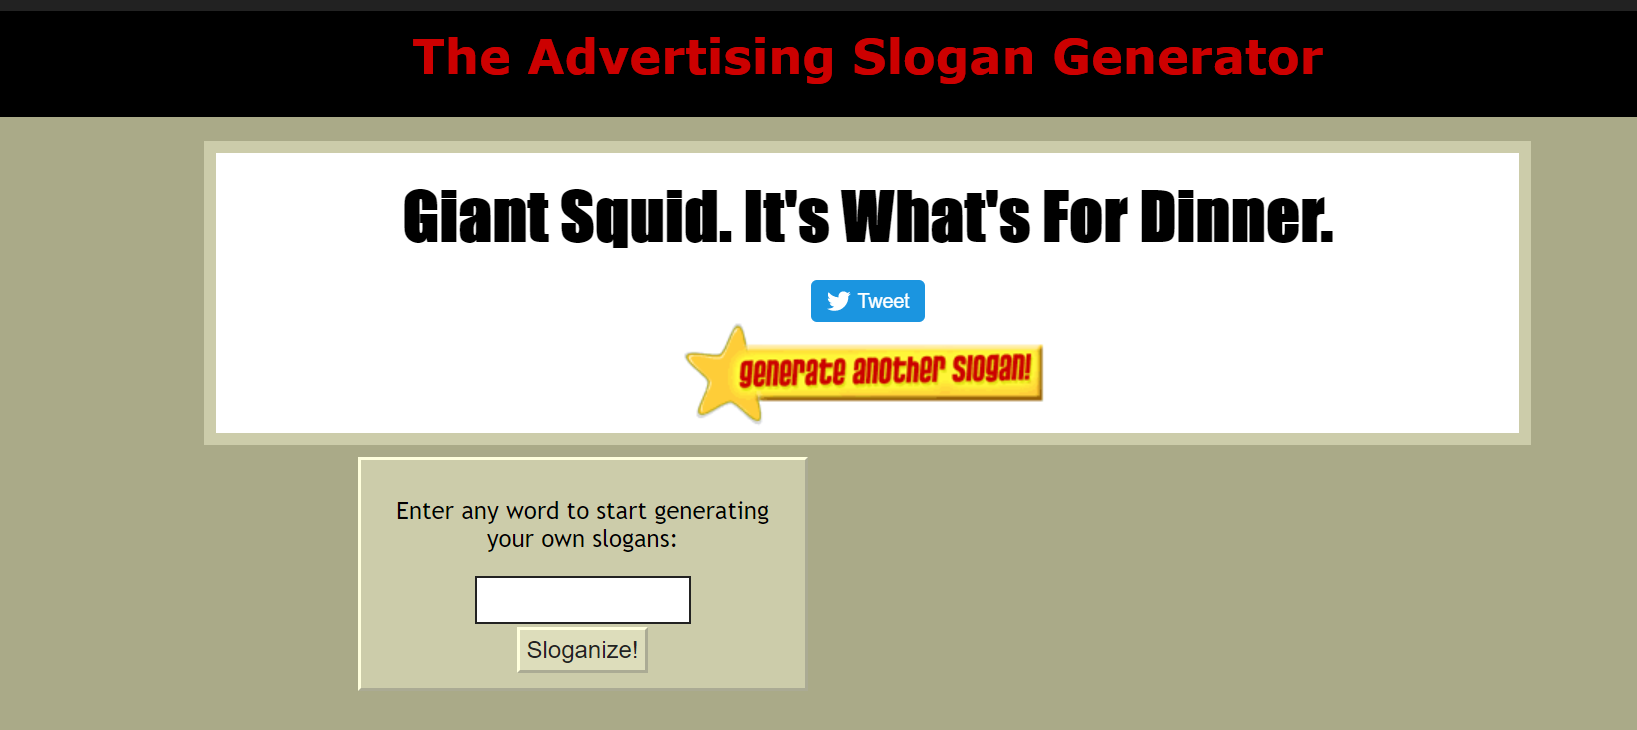 The Advertising Slogan Generator